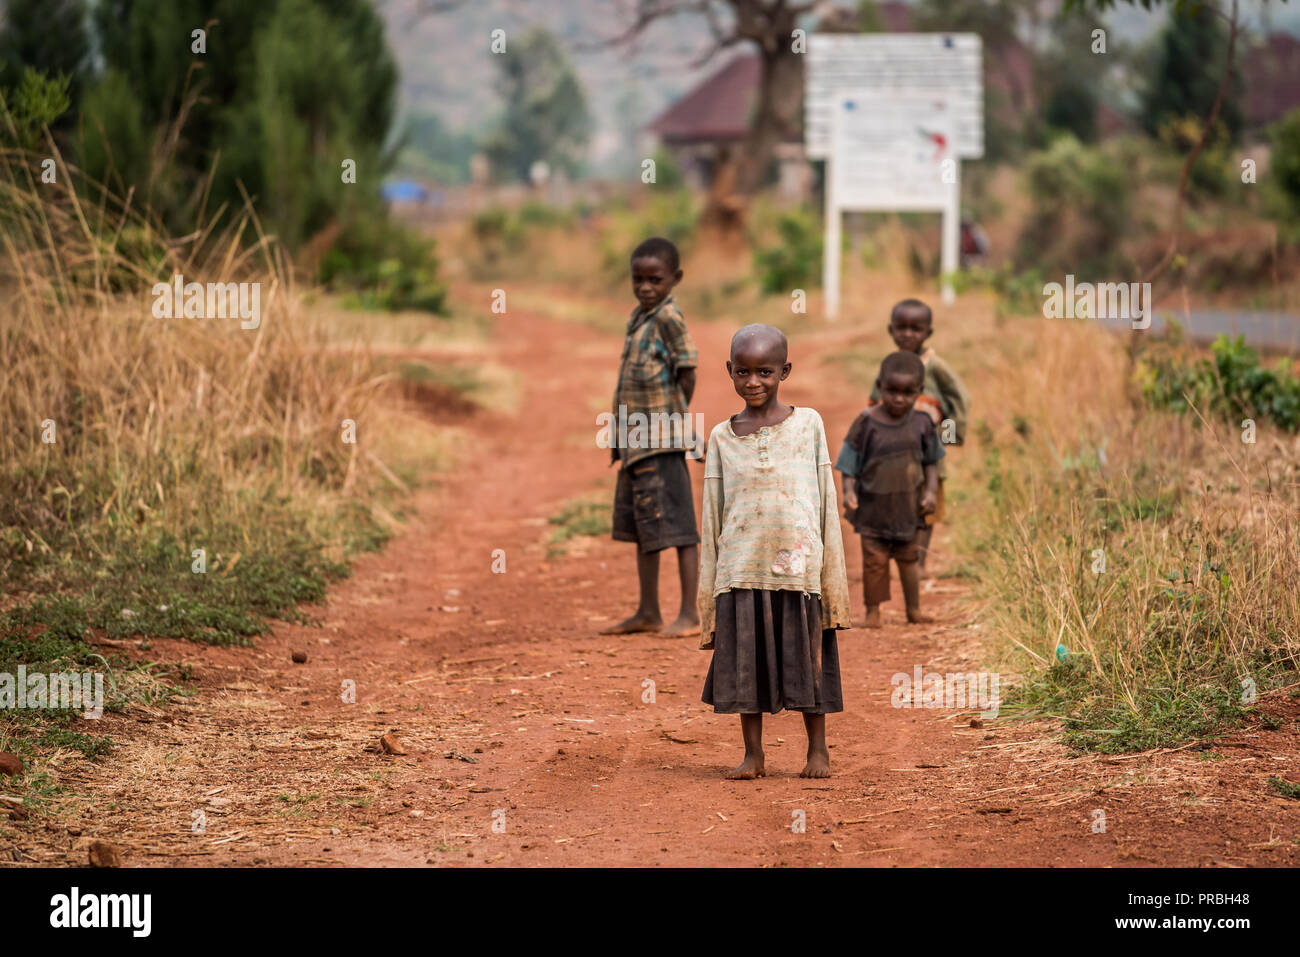 Children from Burundi on a dusty road Stock Photo